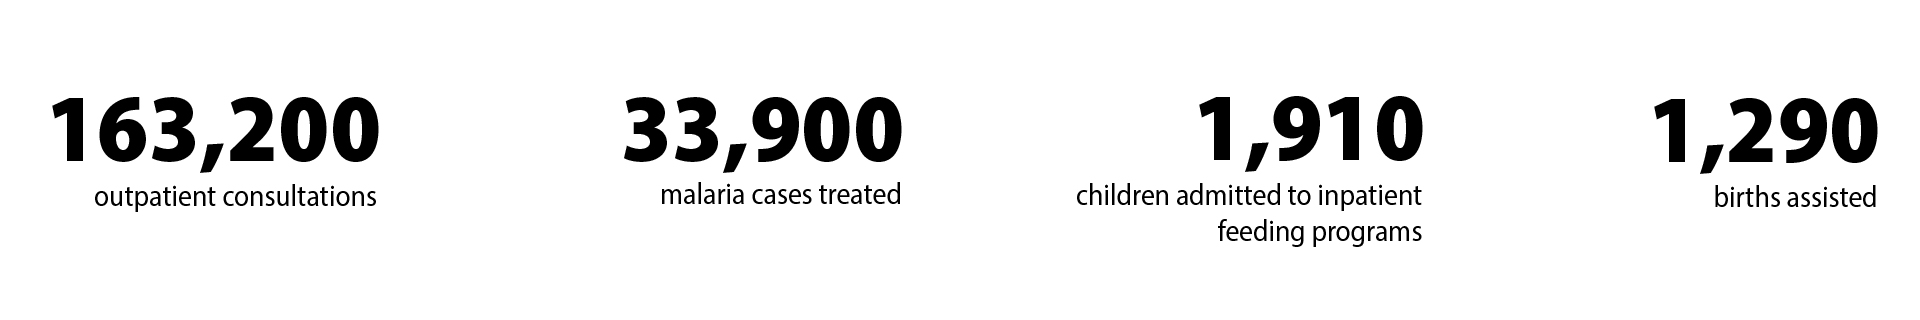 Ethiopia MSF stats